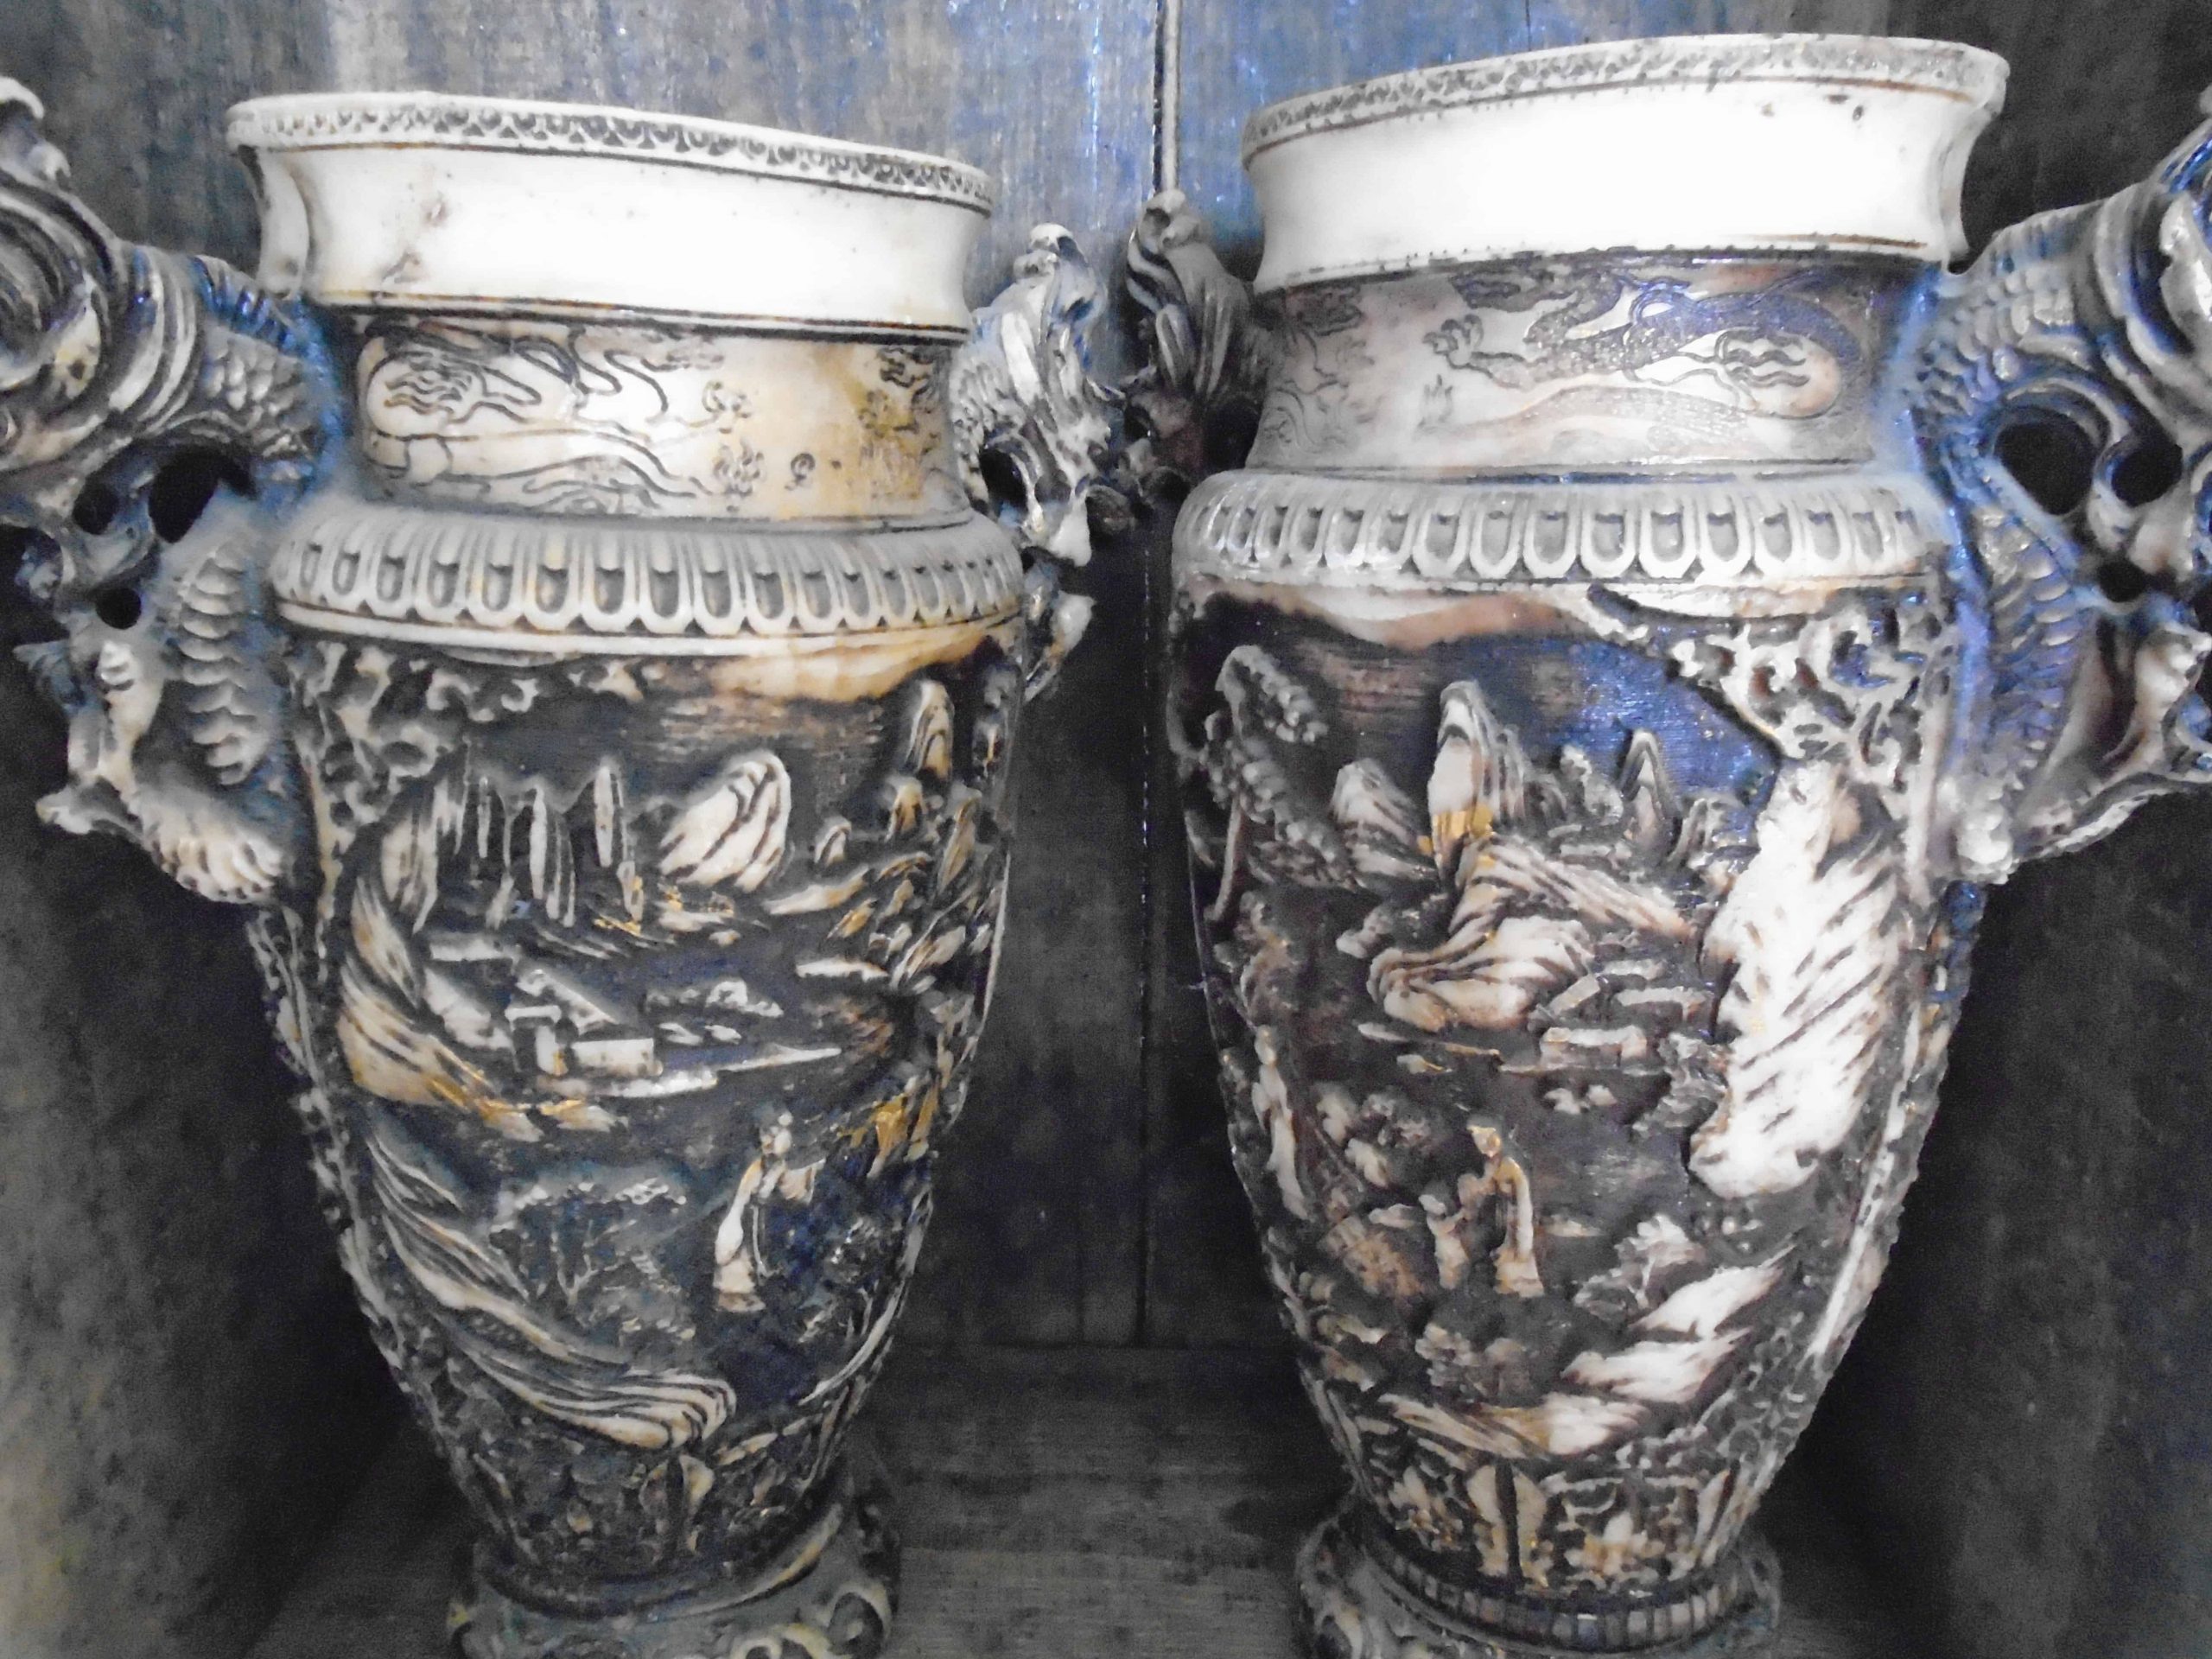 Awesome Cool Tips Floor Vases Hallway Vases Verre Geant regarding dimensions 5152 X 3864